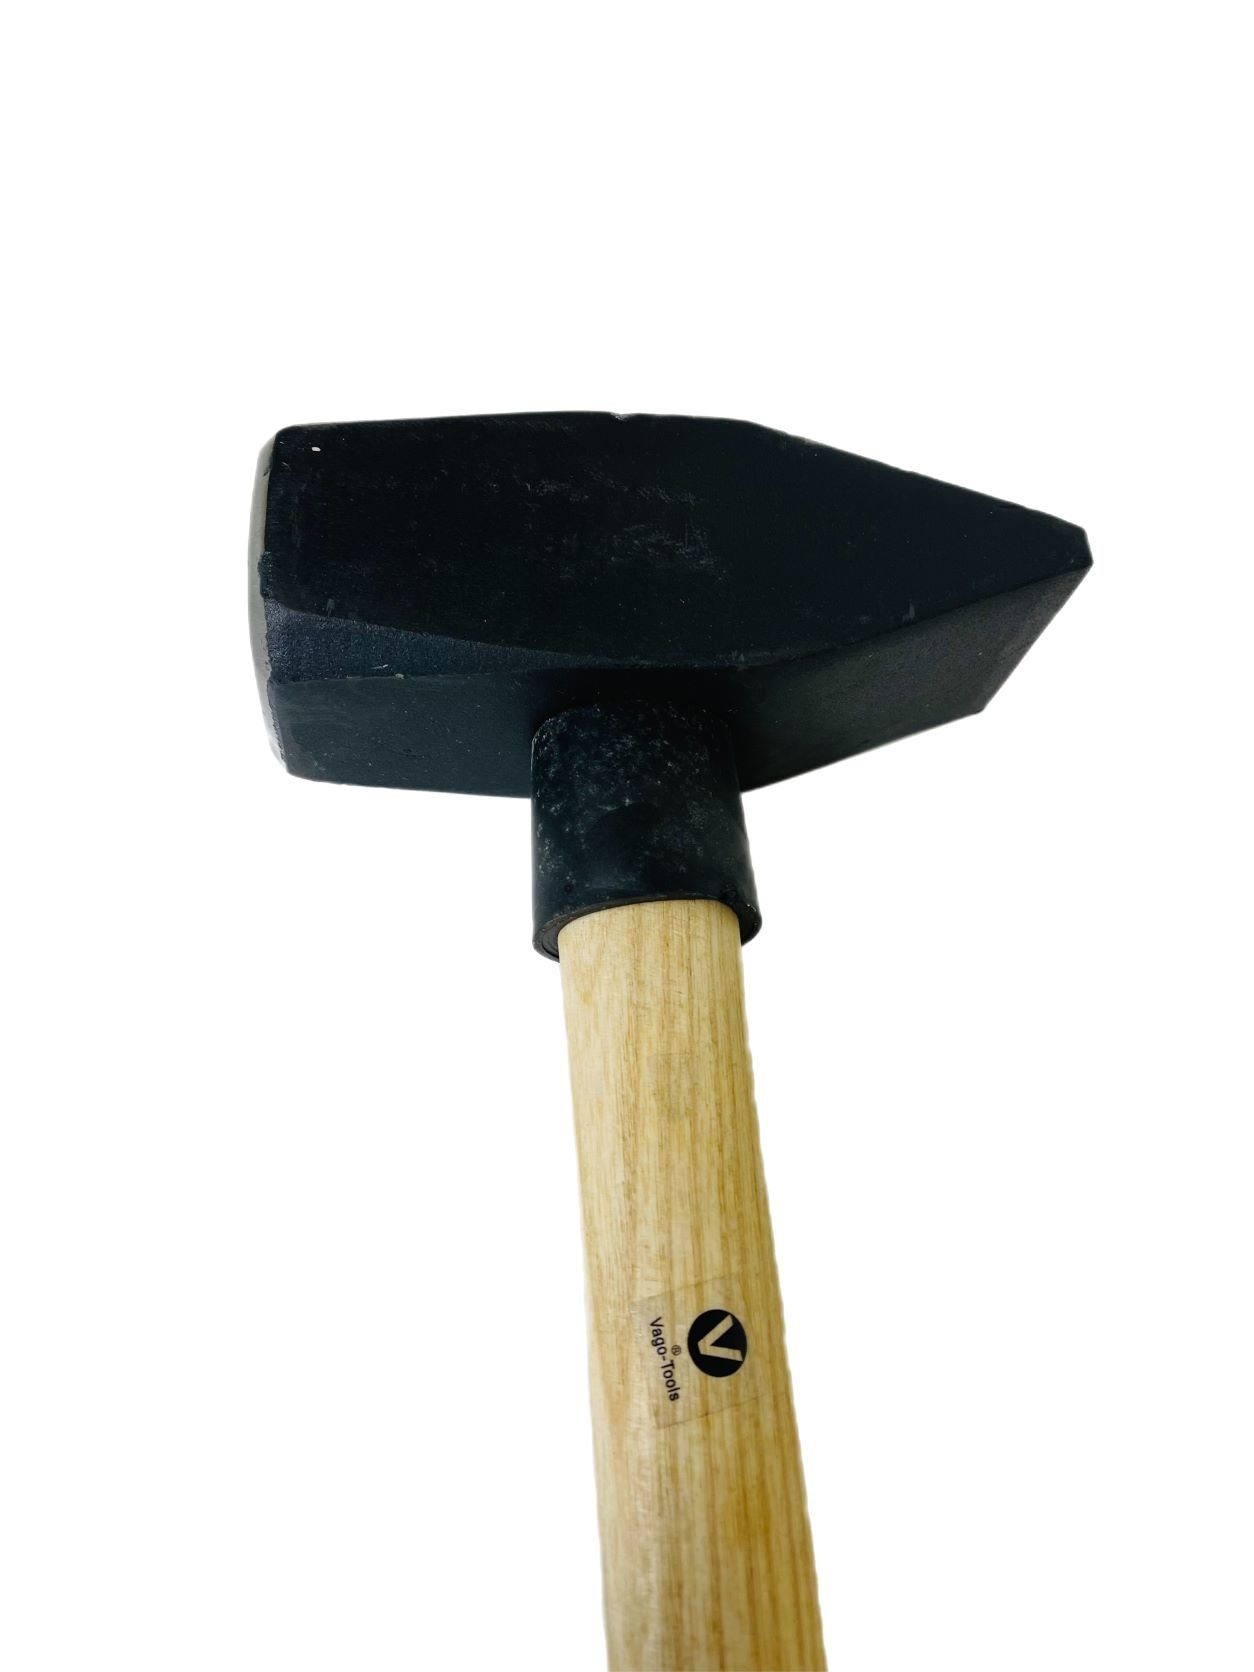 kg Stielschutz Hammer Hammer VaGo-Tools Schlosserhammer 5 Holzstiel